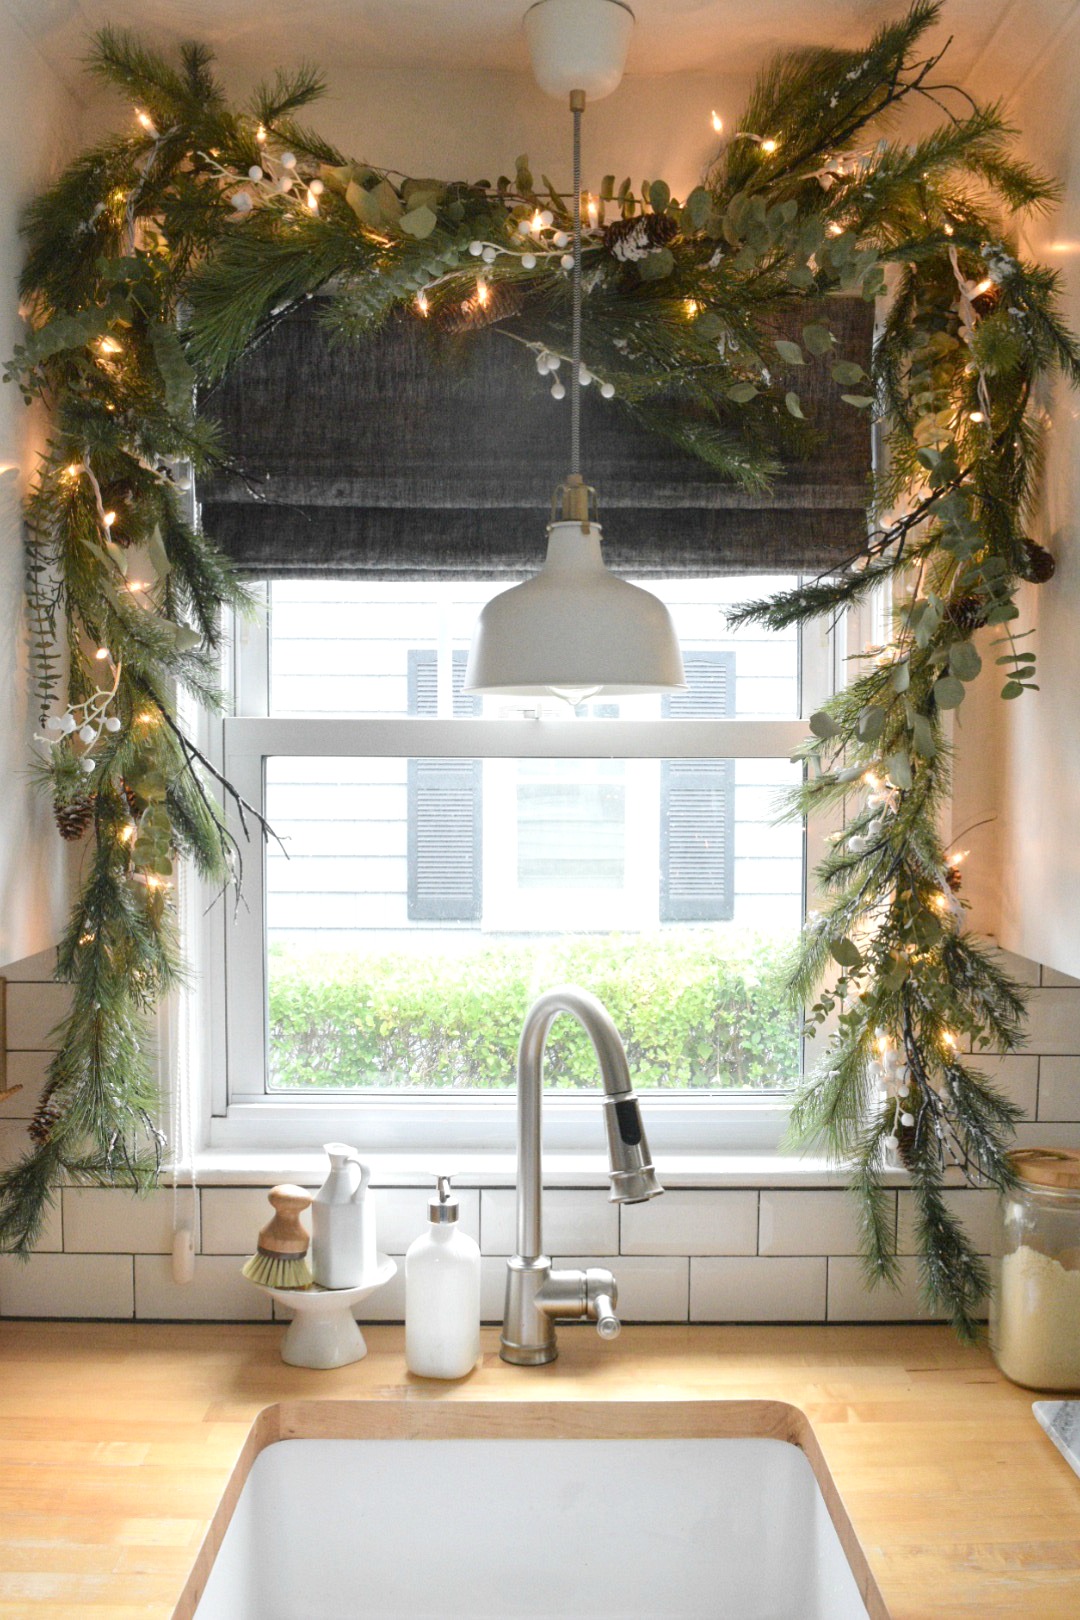 garland kitchen decor christmas window stunning holidays ways elegant source decorations farmhouse started above